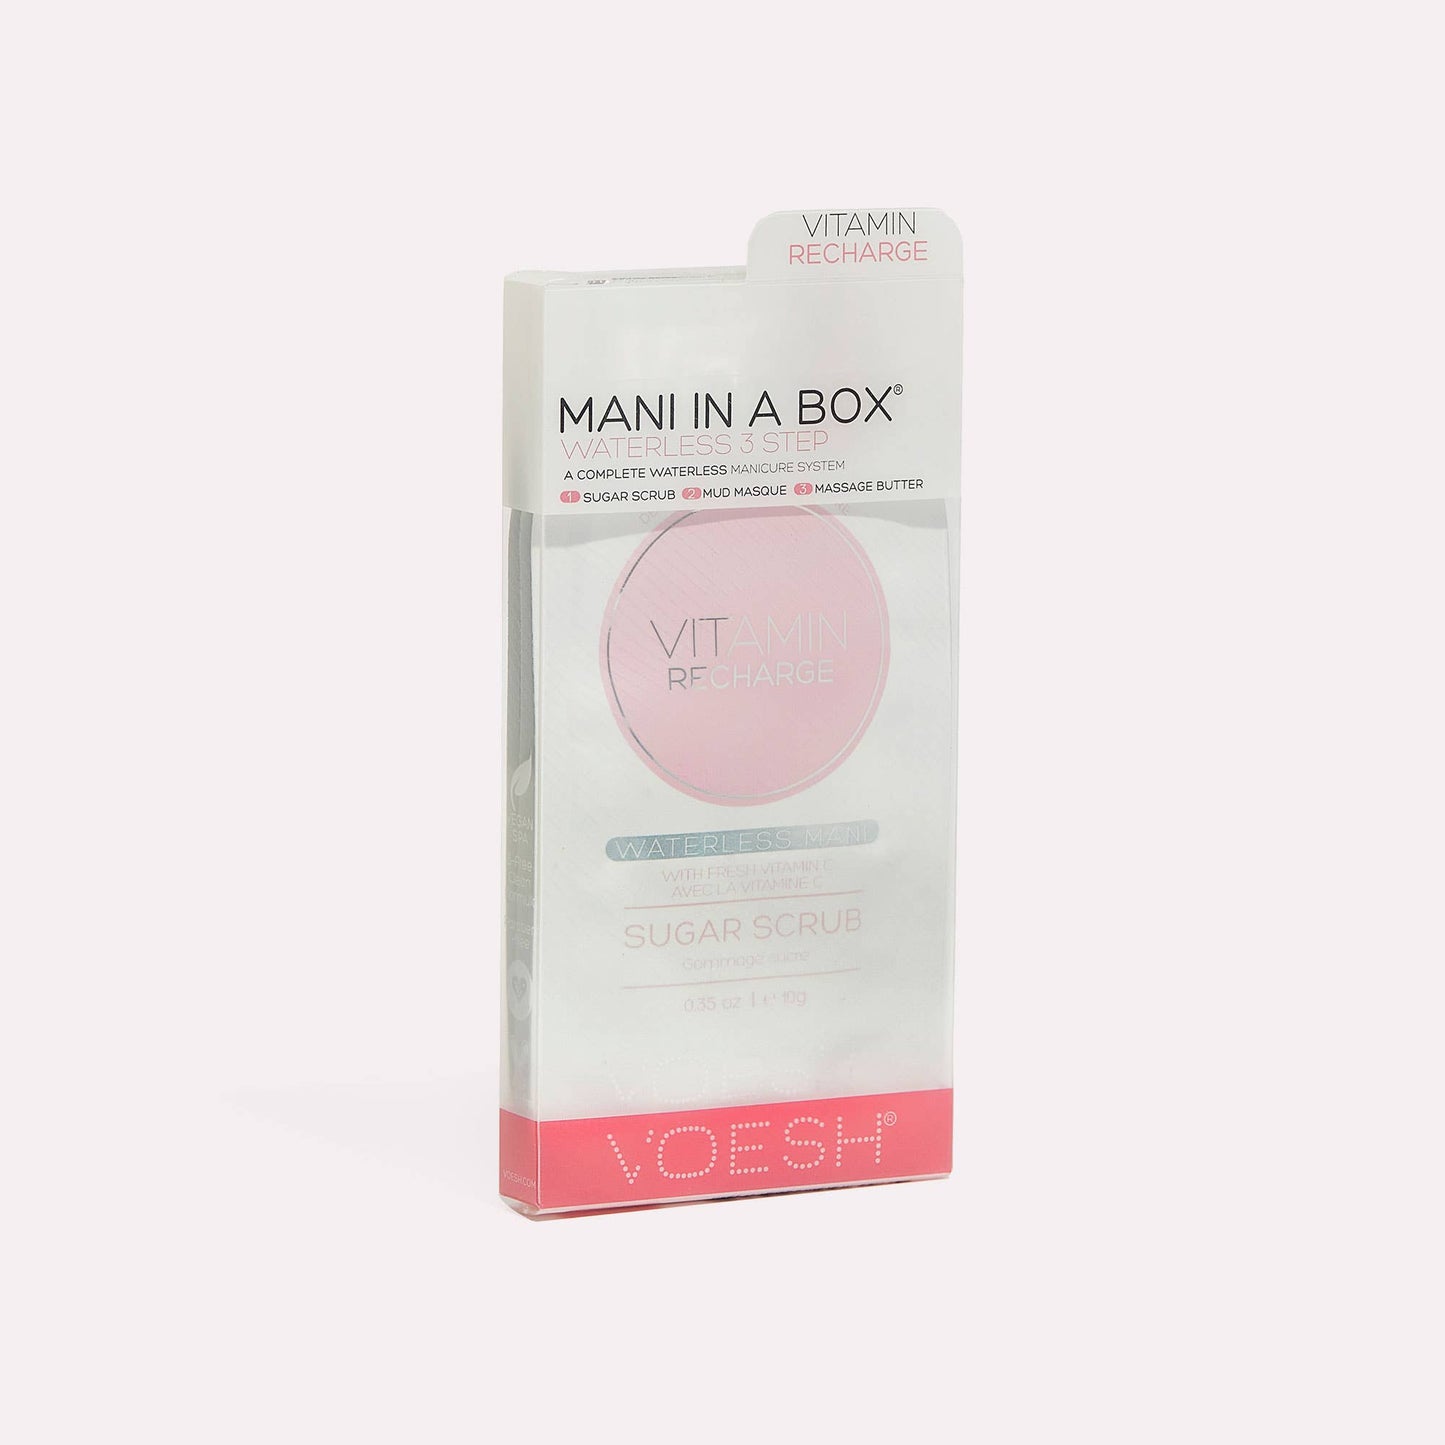 Mani in a Box Vitamin Recharge